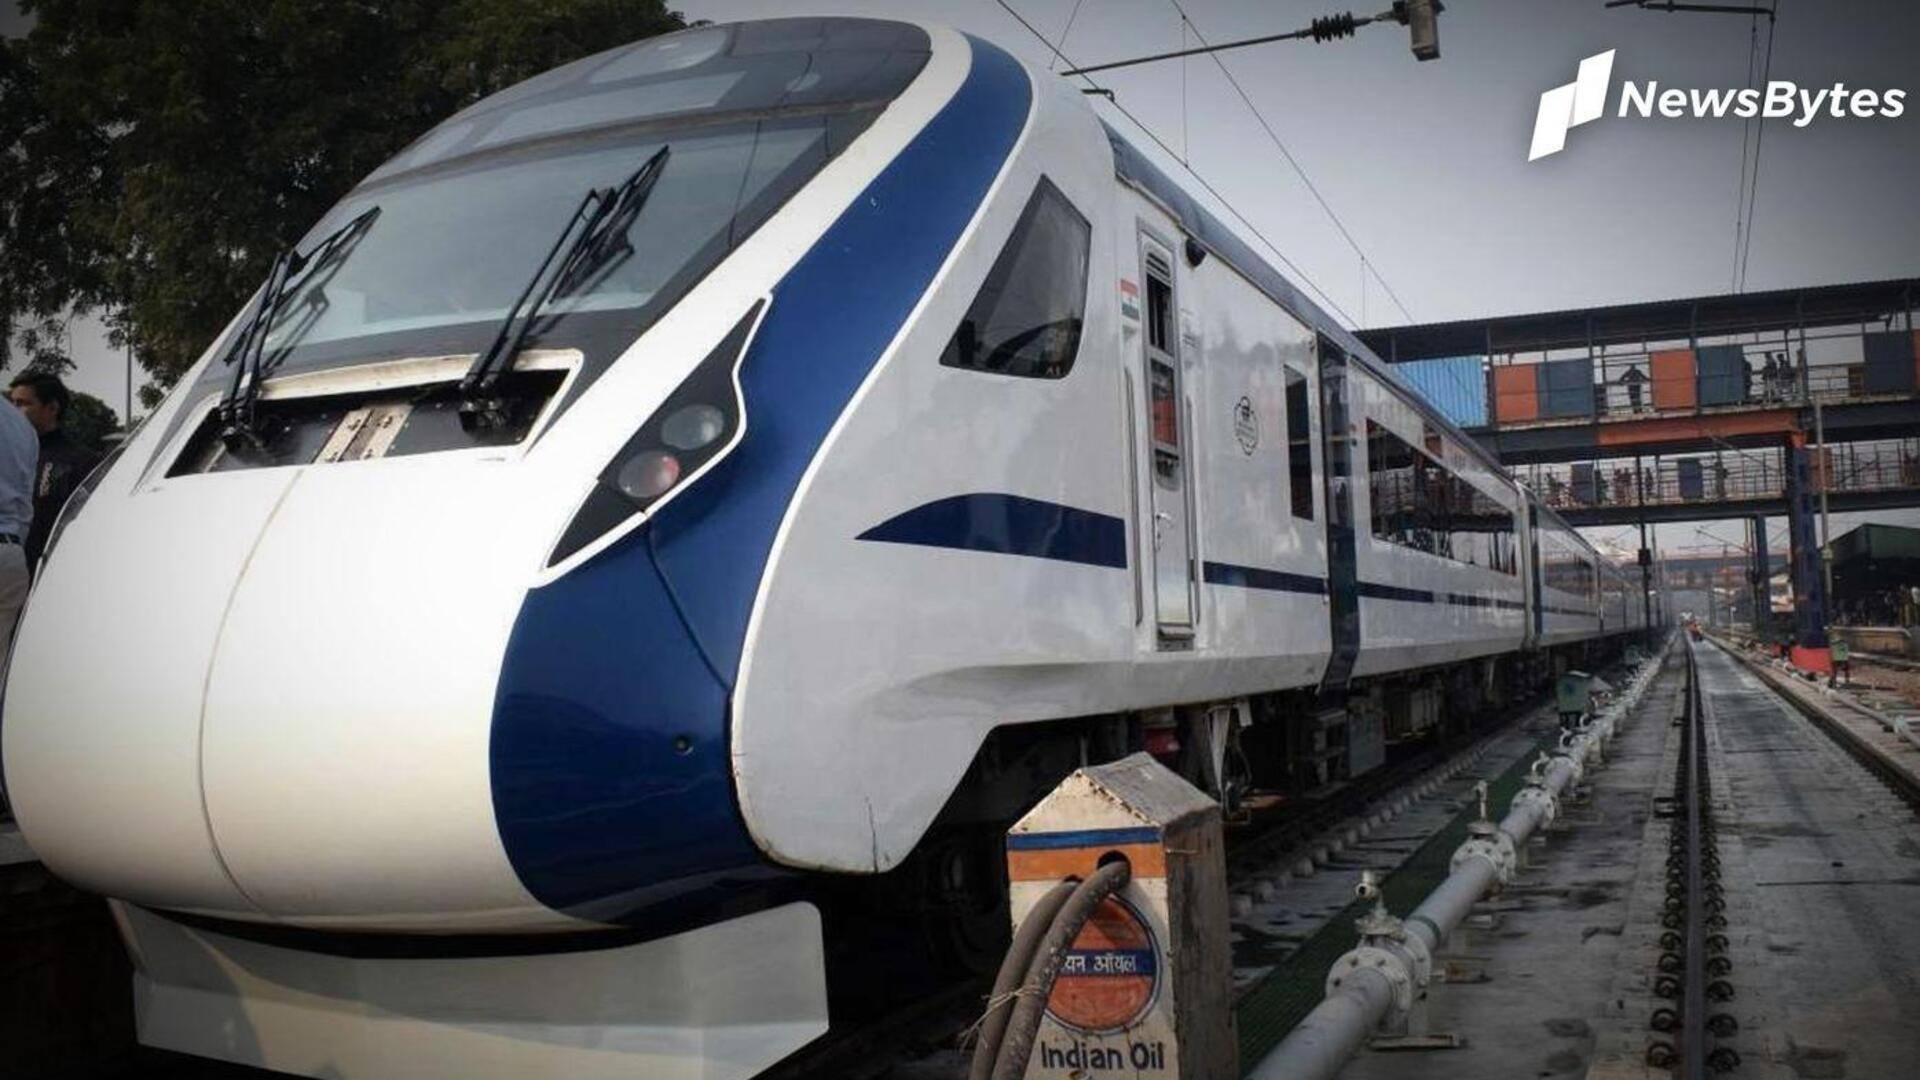 राजस्थान को मिलेगी पहली वंदे भारत एक्सप्रेस ट्रेन, प्रधानमंत्री मोदी आज दिखाएंगे हरी झंडी